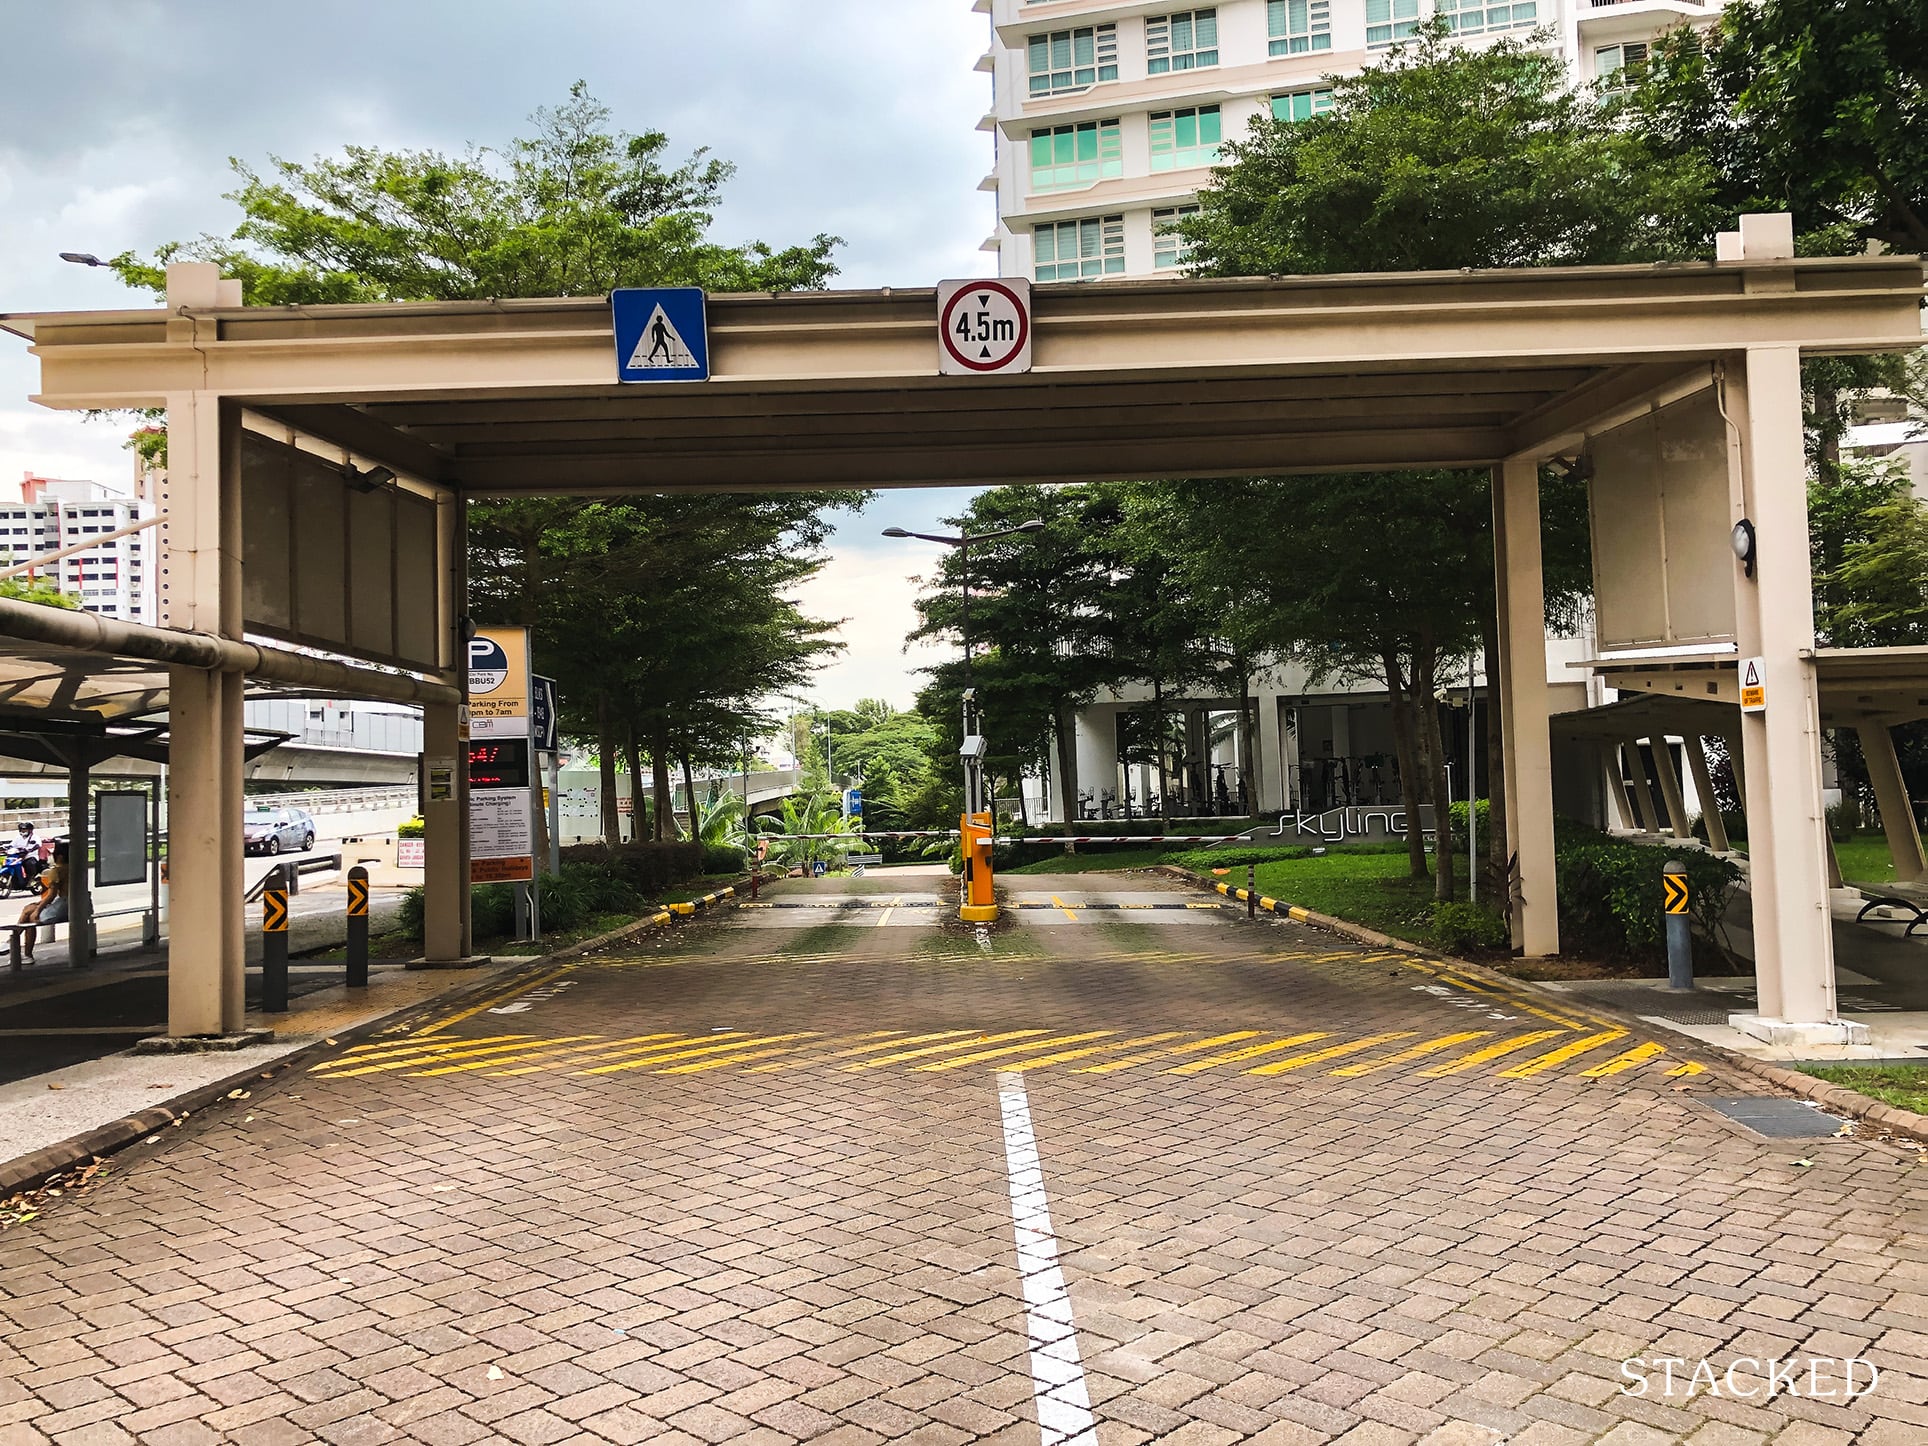 Skyline @ Bukit Batok Carpark Entrance